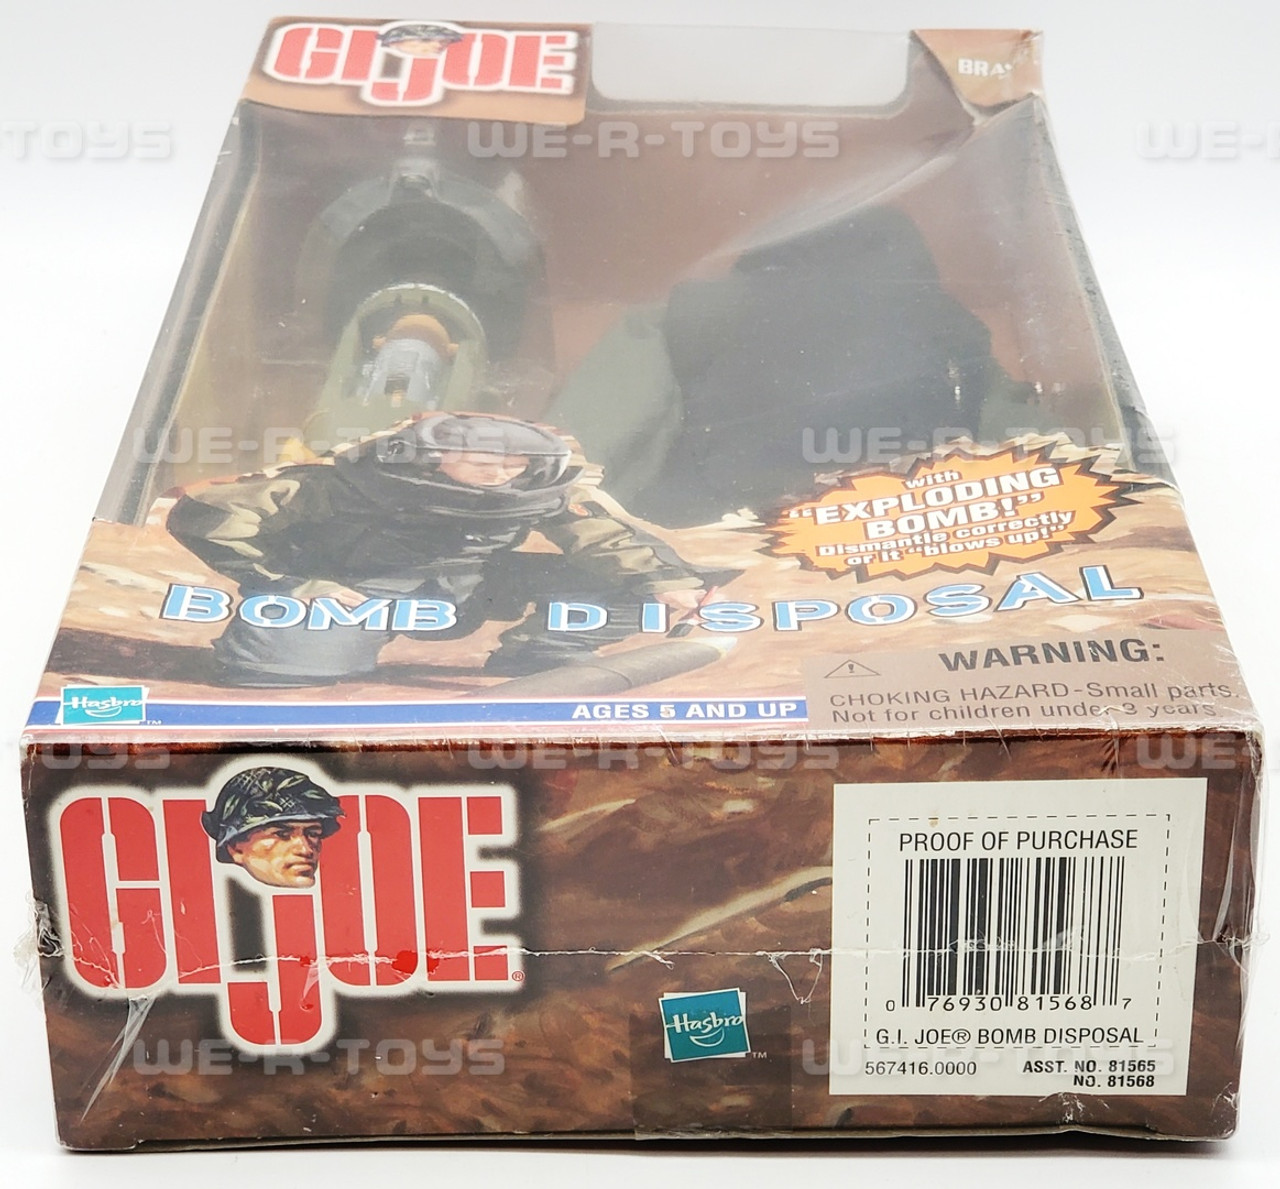 GI Joe Toy Sigma Six & 12 Action Figure Accessories: Grenade